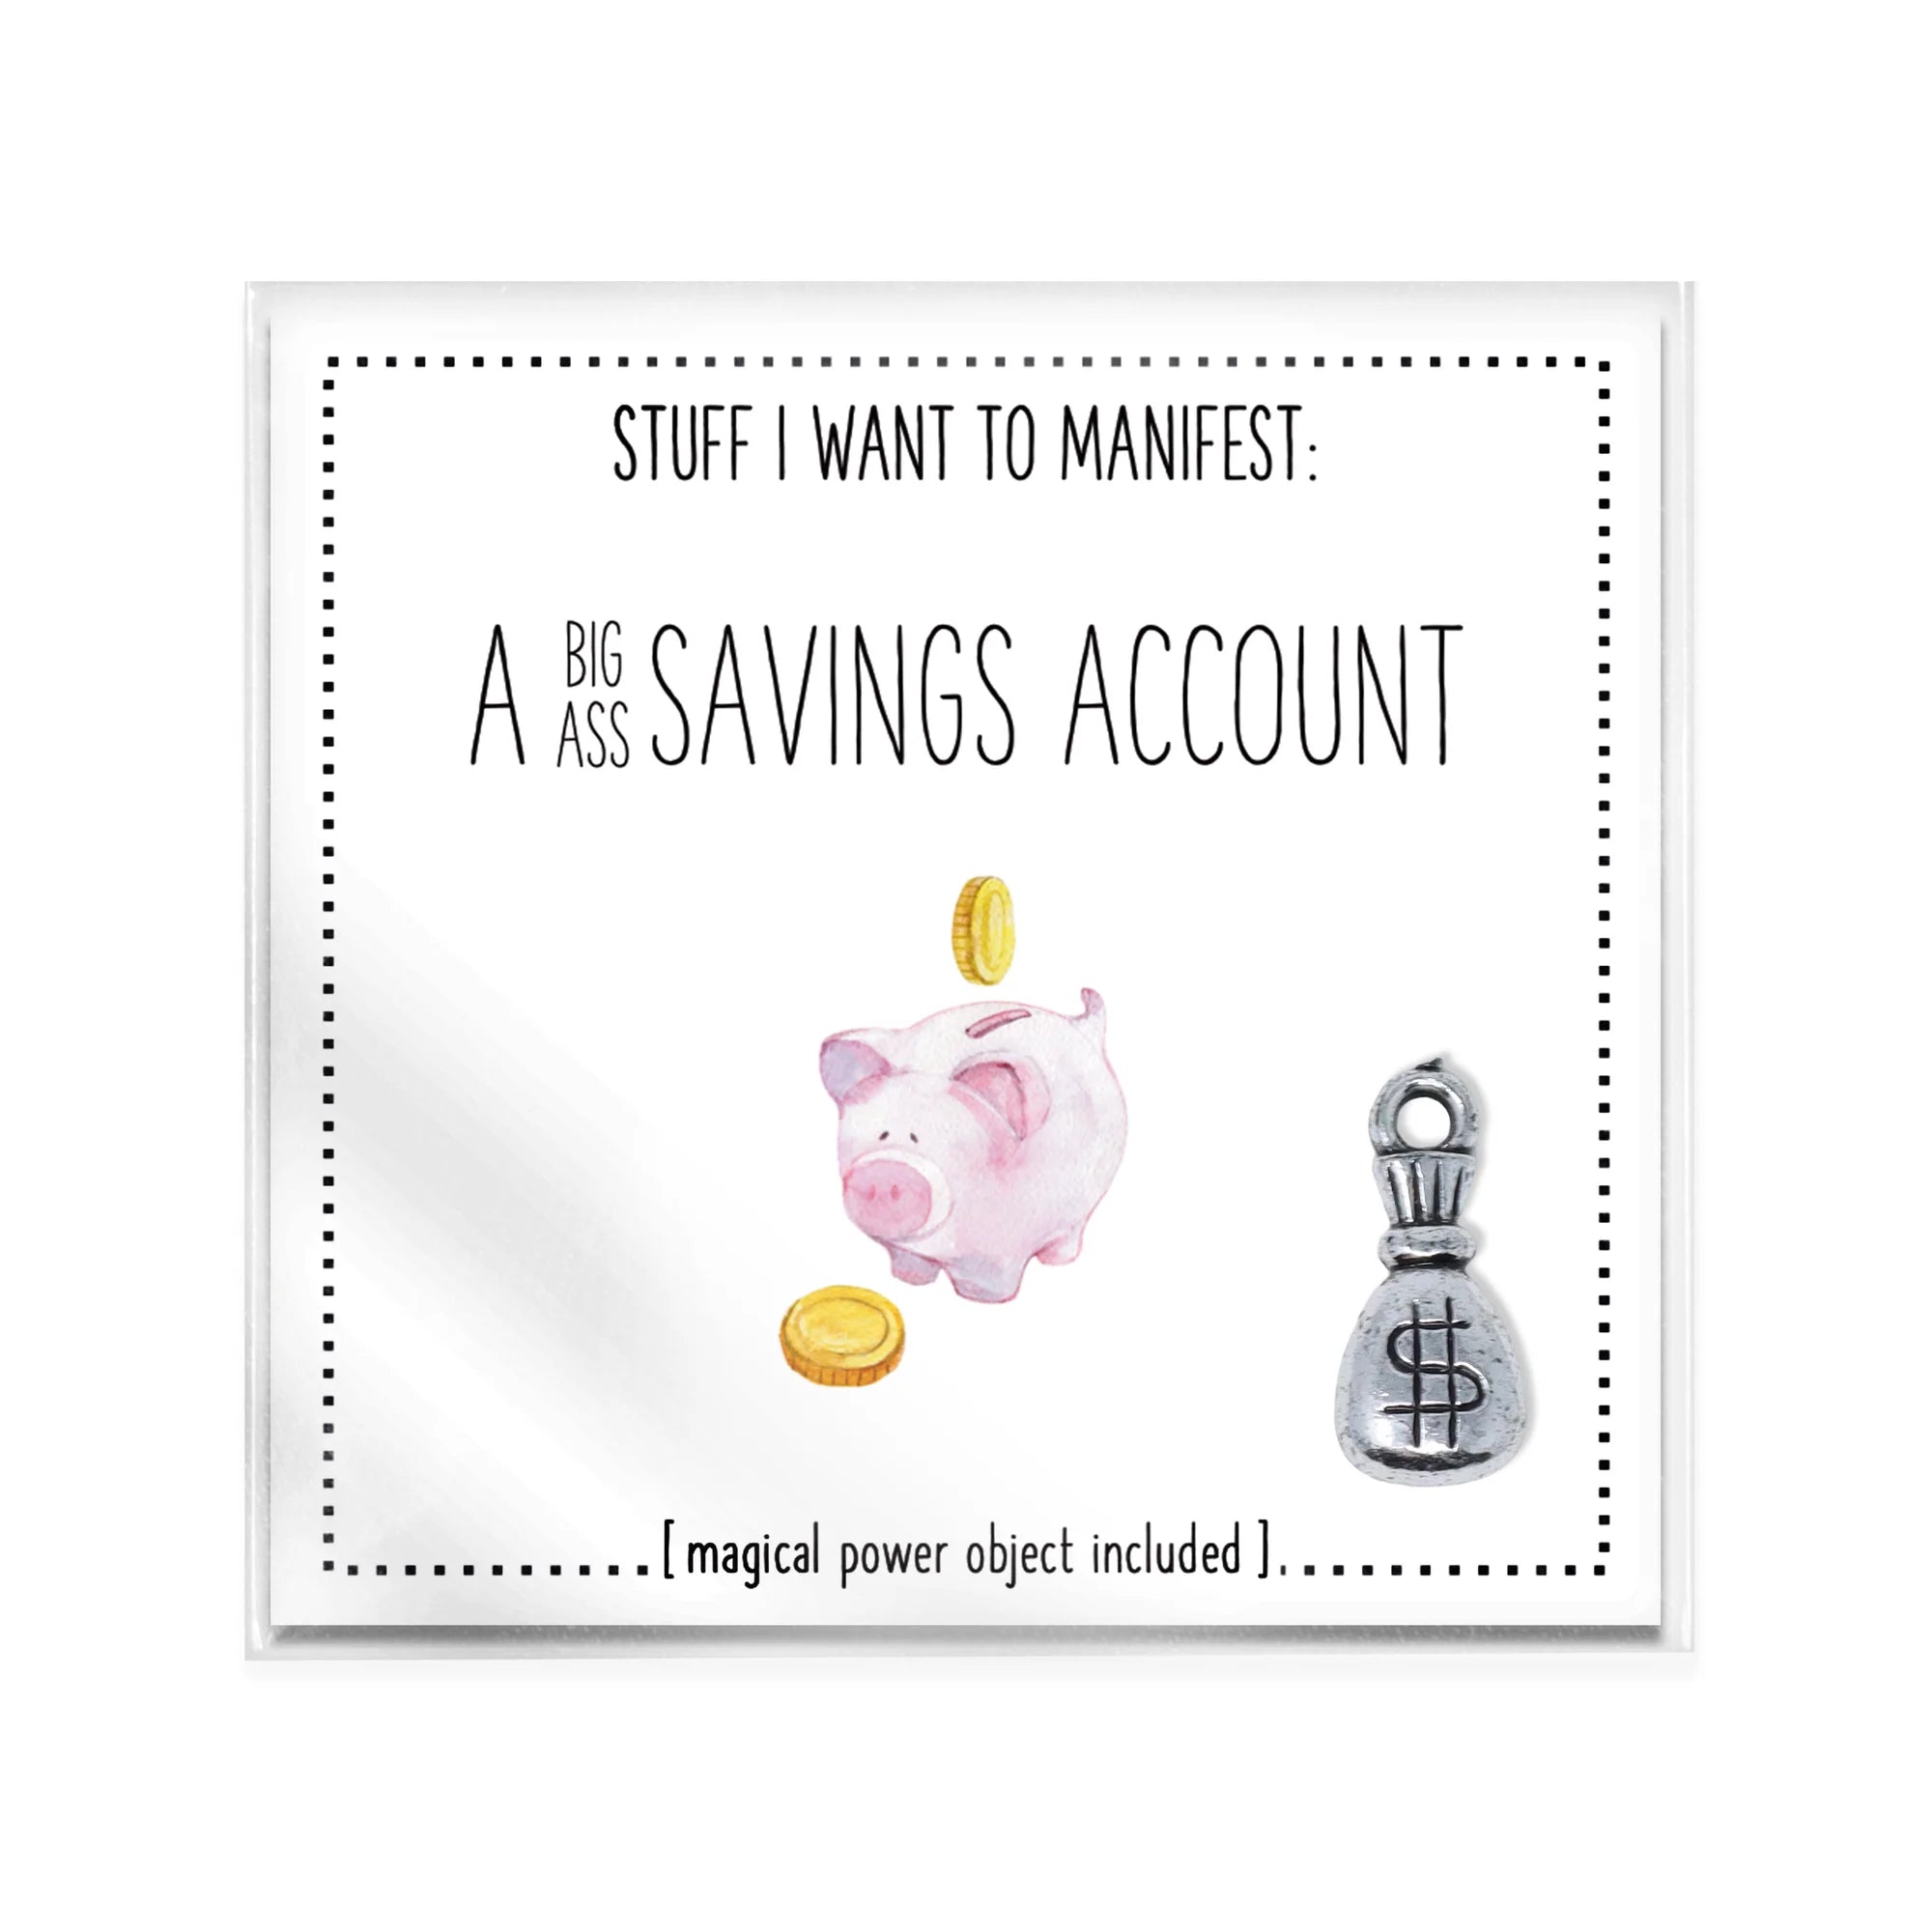 A Big Ass Savings Account Manifest Card